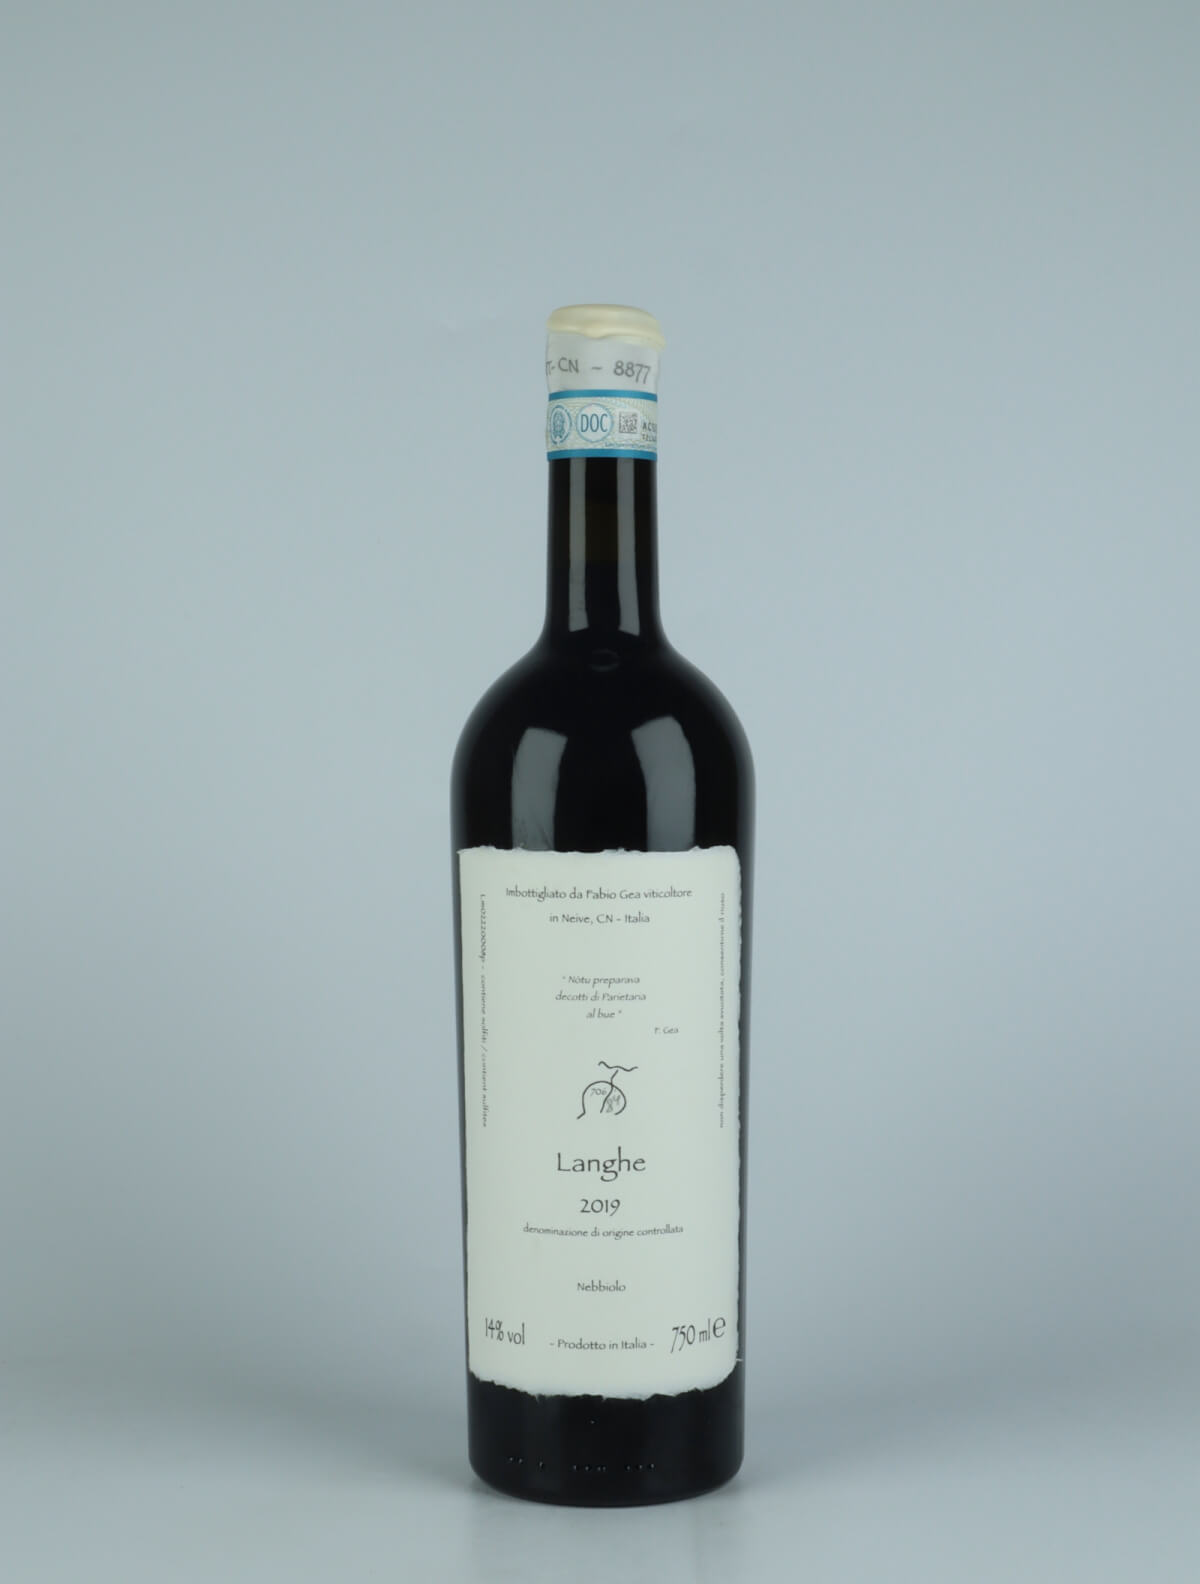 En flaske 2019 Langhe Nebbiolo (Nòtu preparava decotti...) Rødvin fra Fabio Gea, Piemonte i Italien